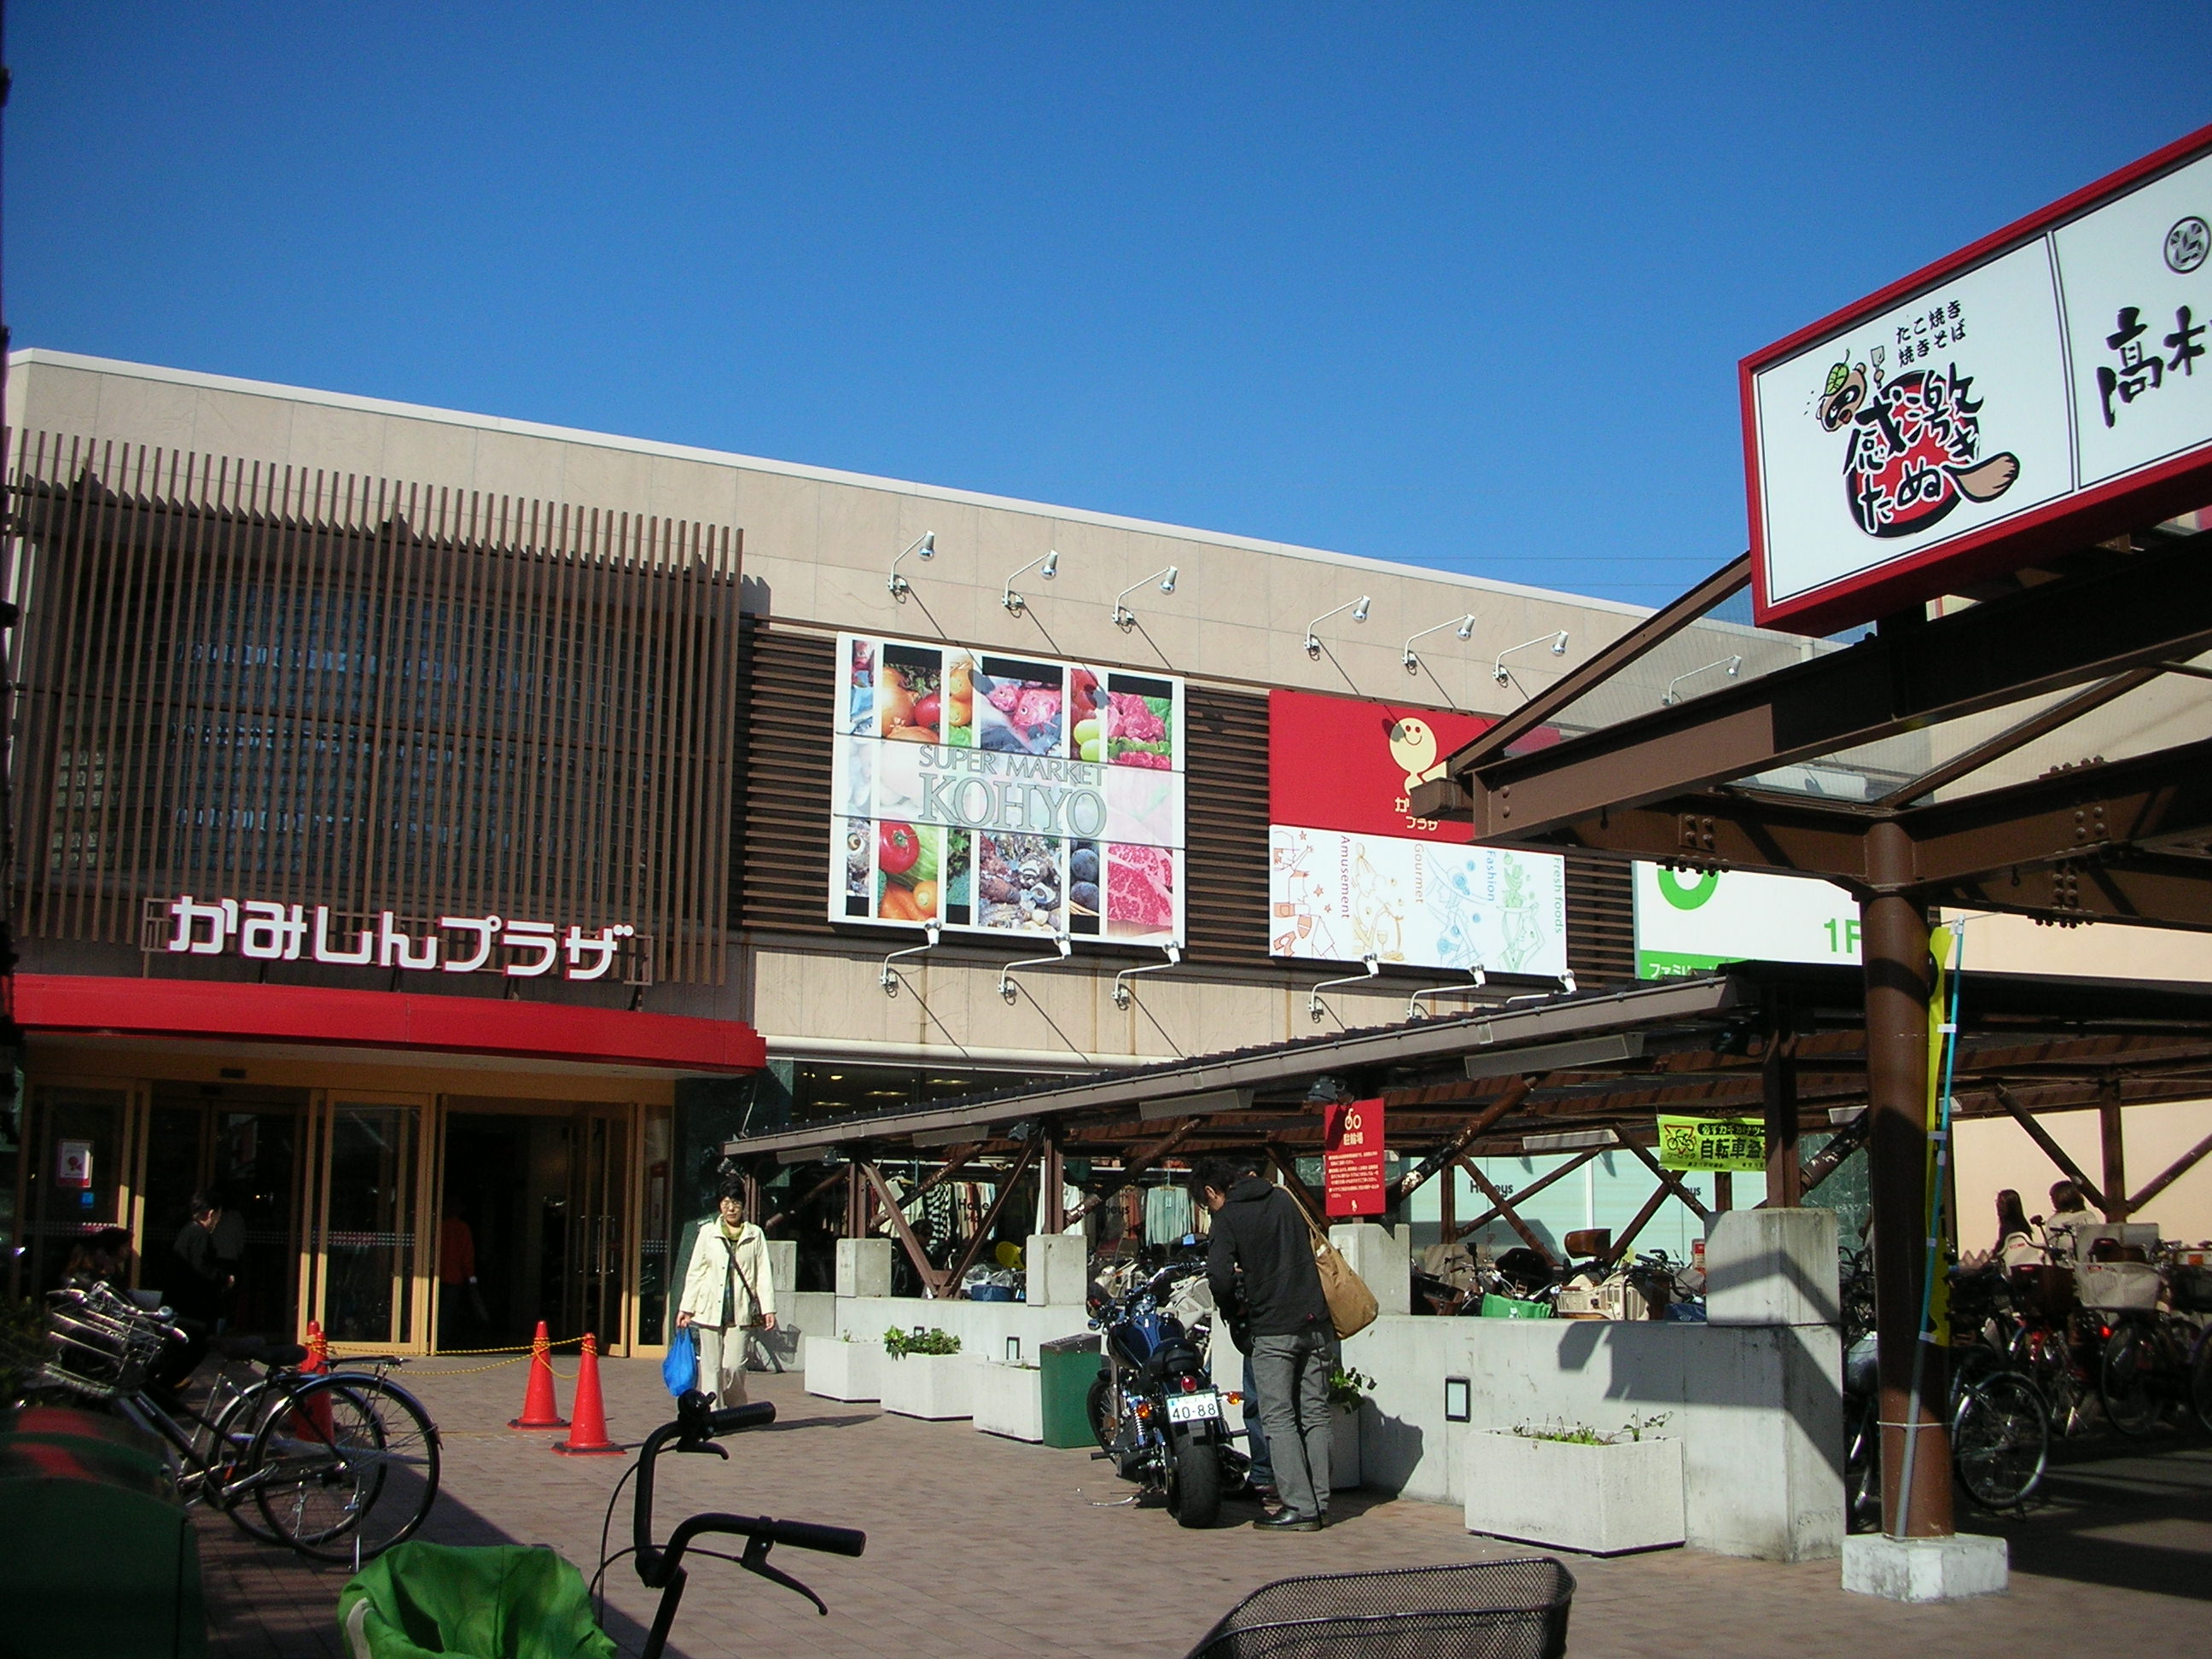 Shopping centre. Kamishin 689m to Plaza (shopping center)